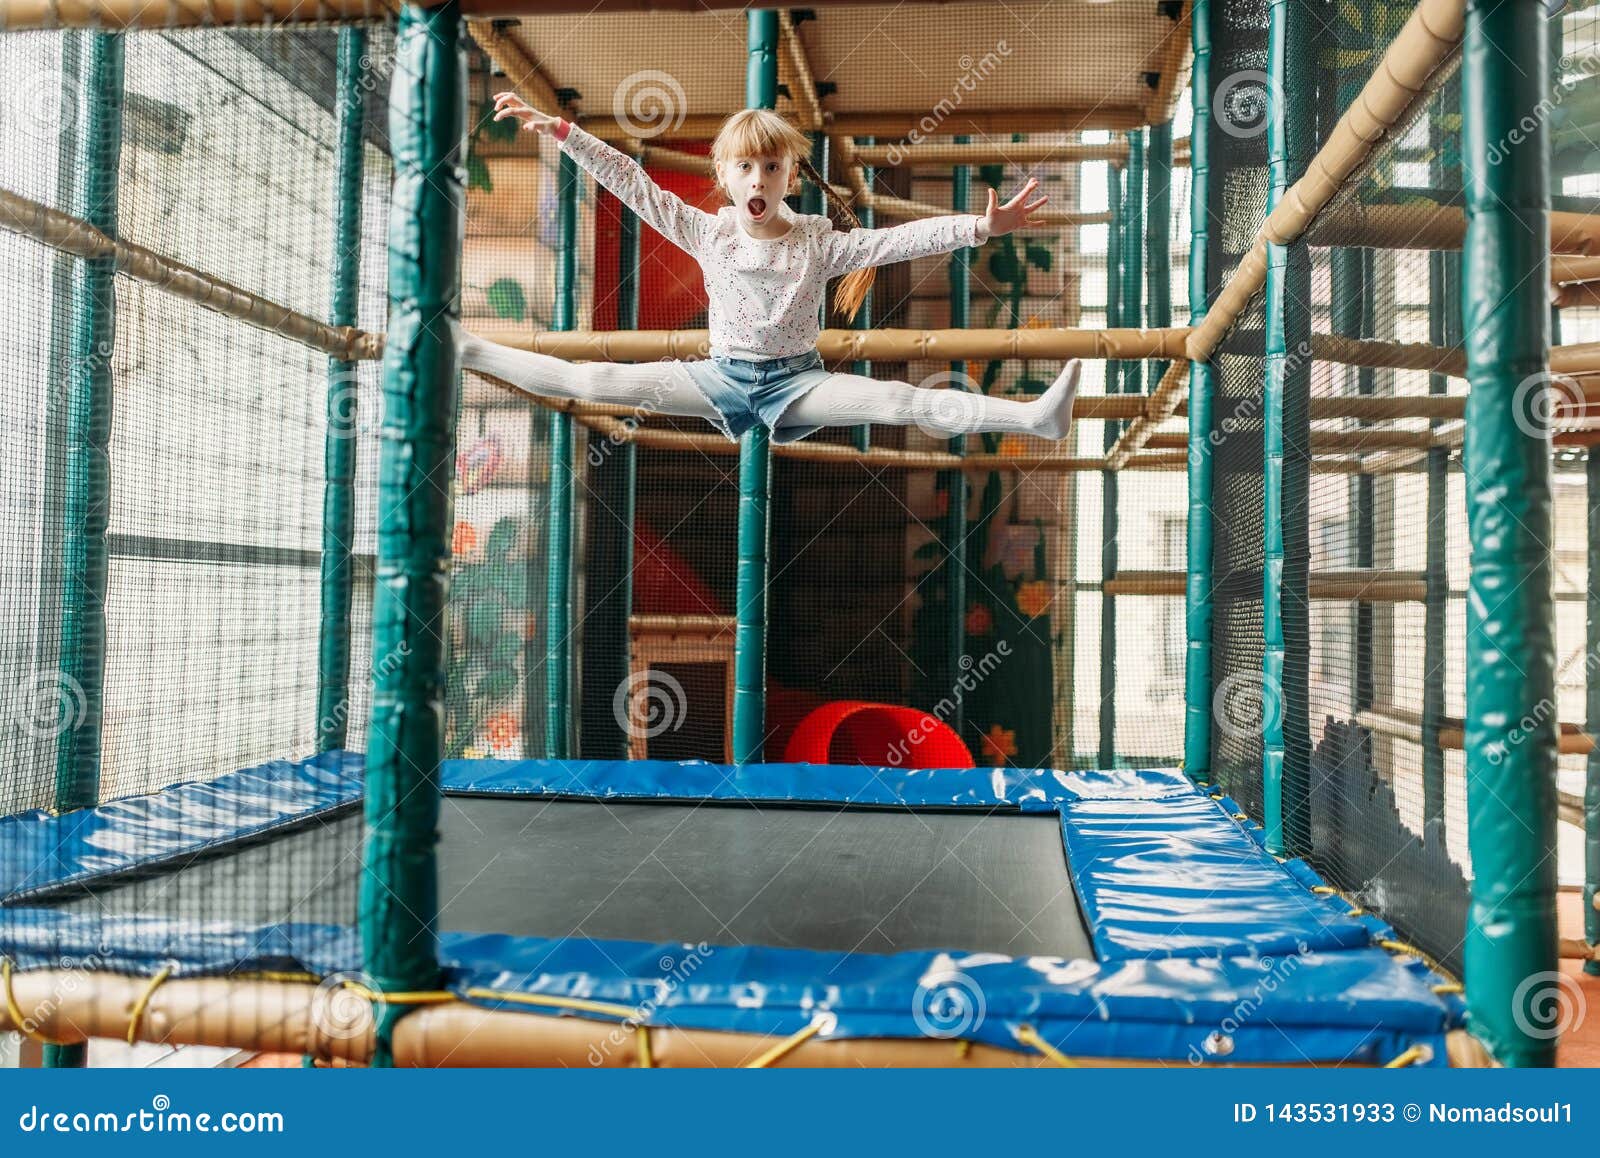 ik heb honger Postcode Weekendtas Funny Girl Jumping on Trampoline, Game Center Stock Image - Image of game,  centre: 143531933